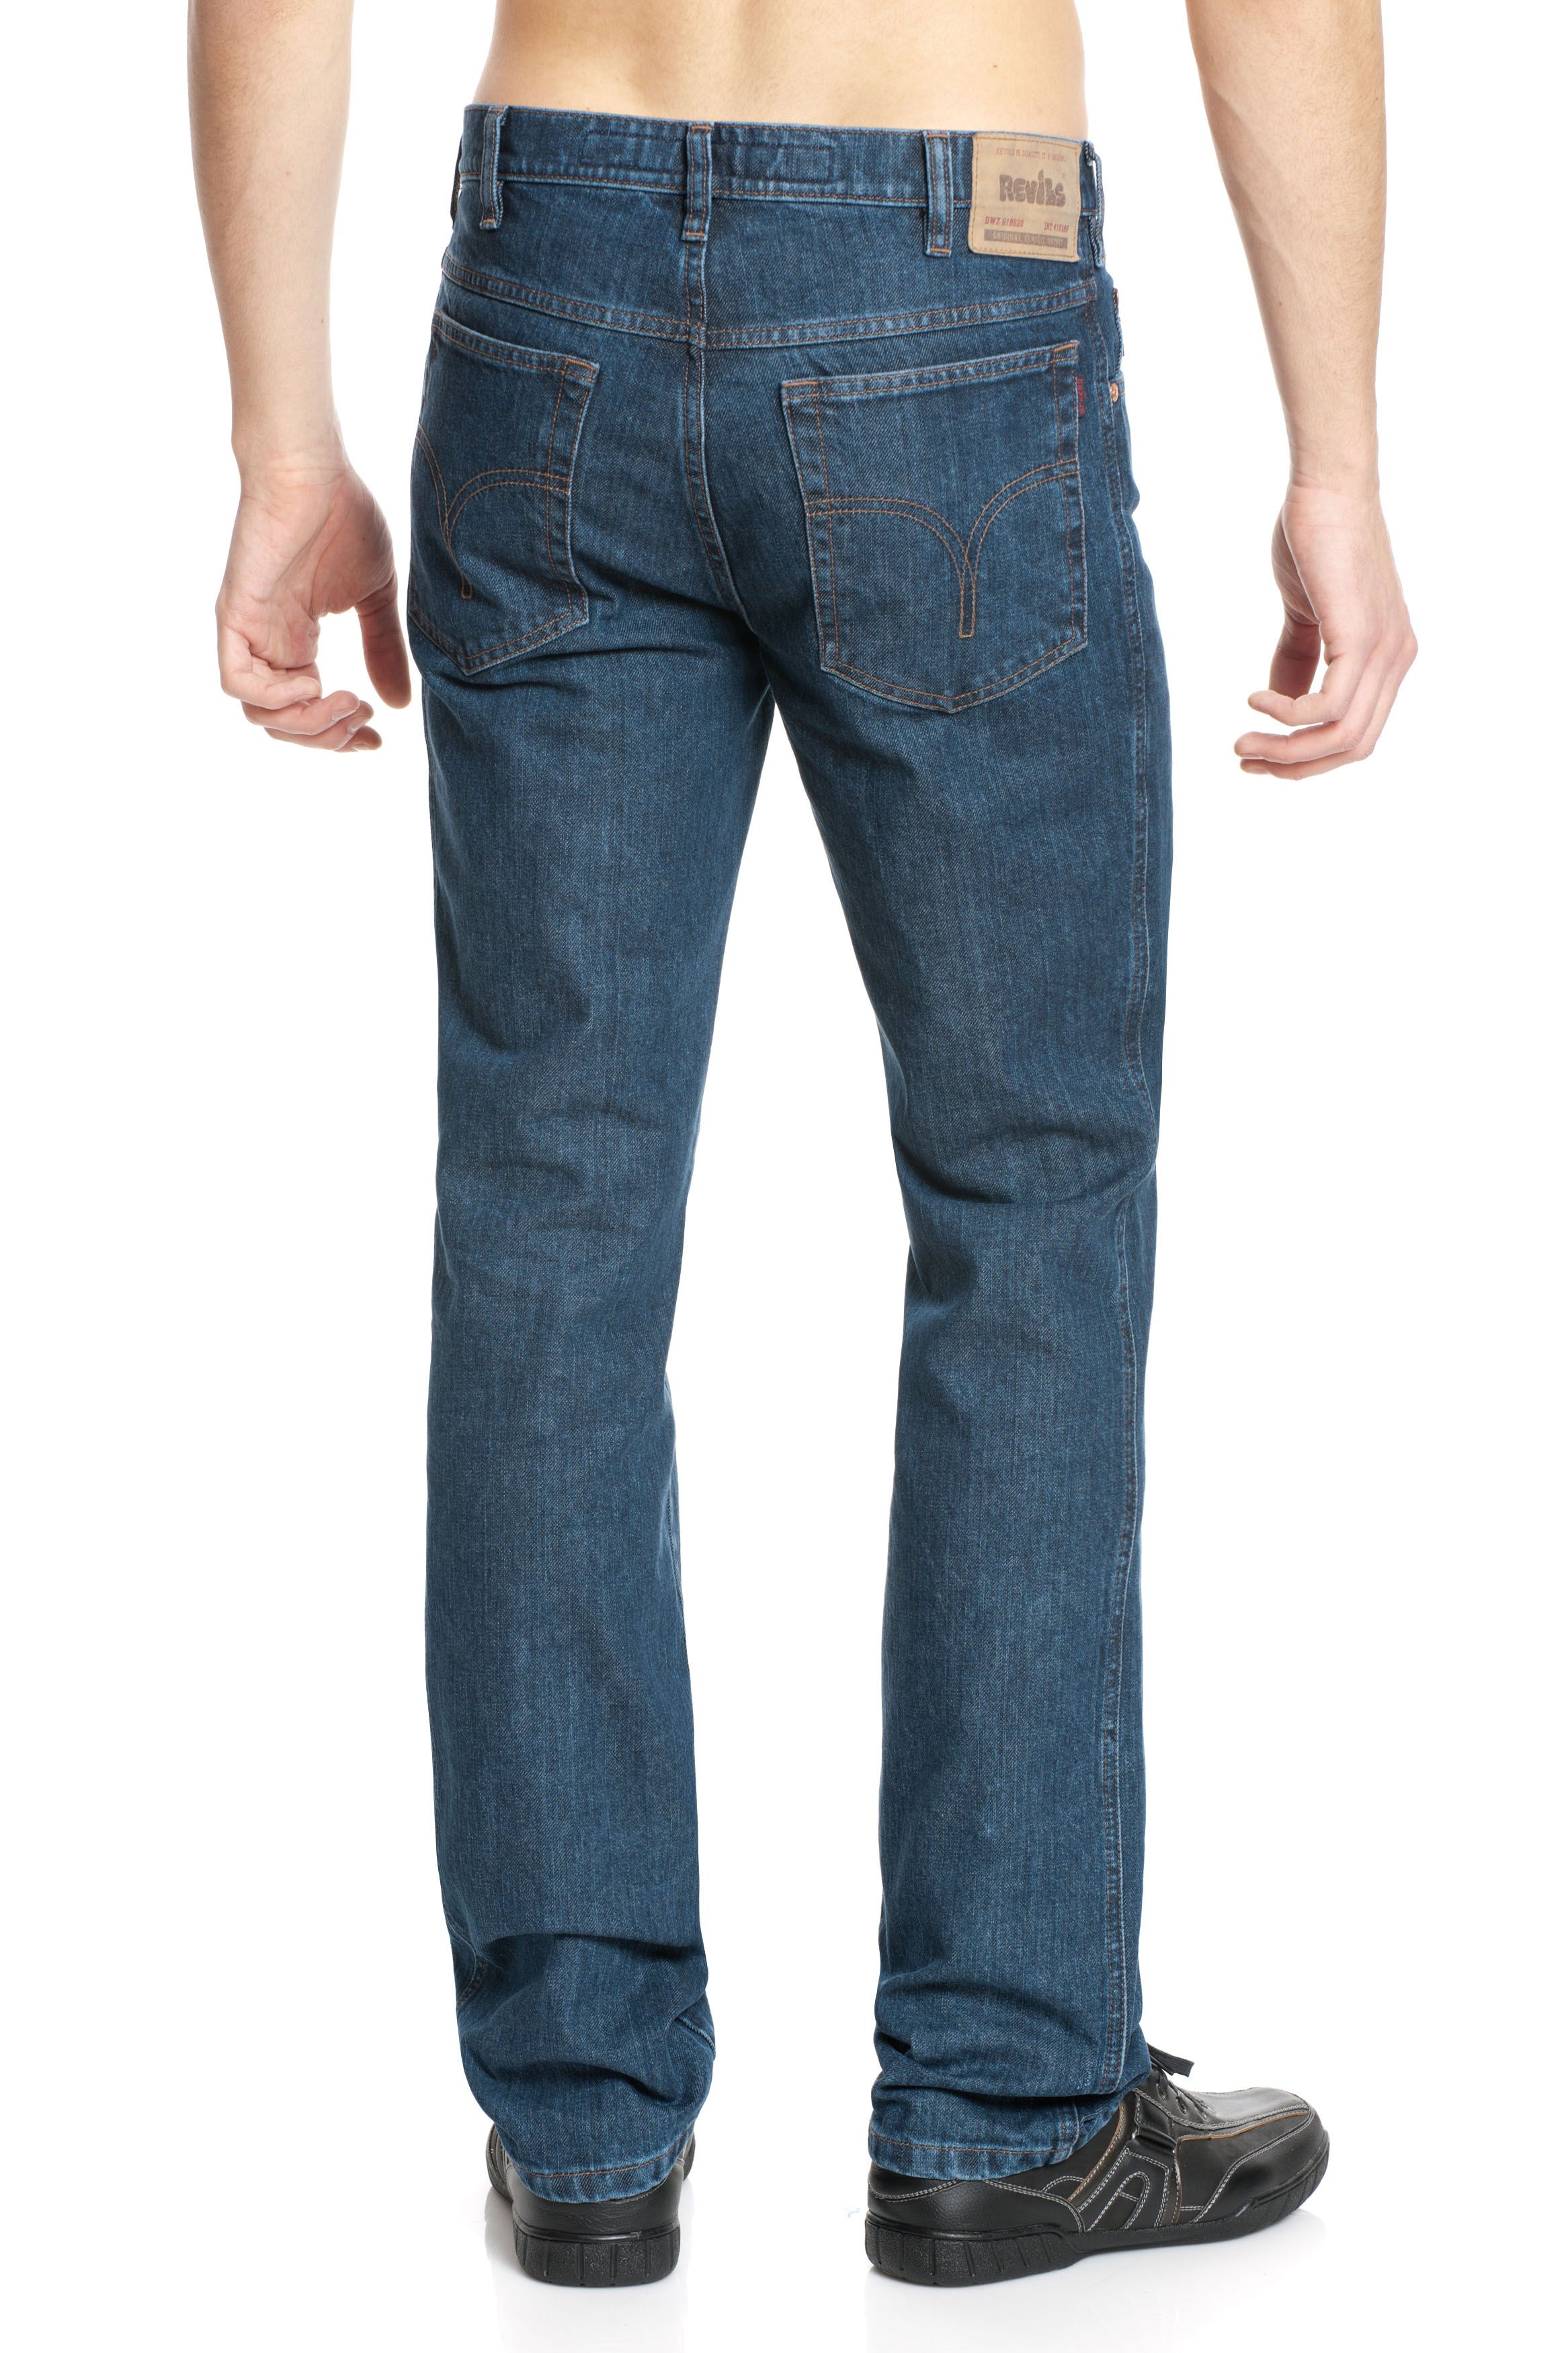 Revils Jeans 302 stonewash extra lang